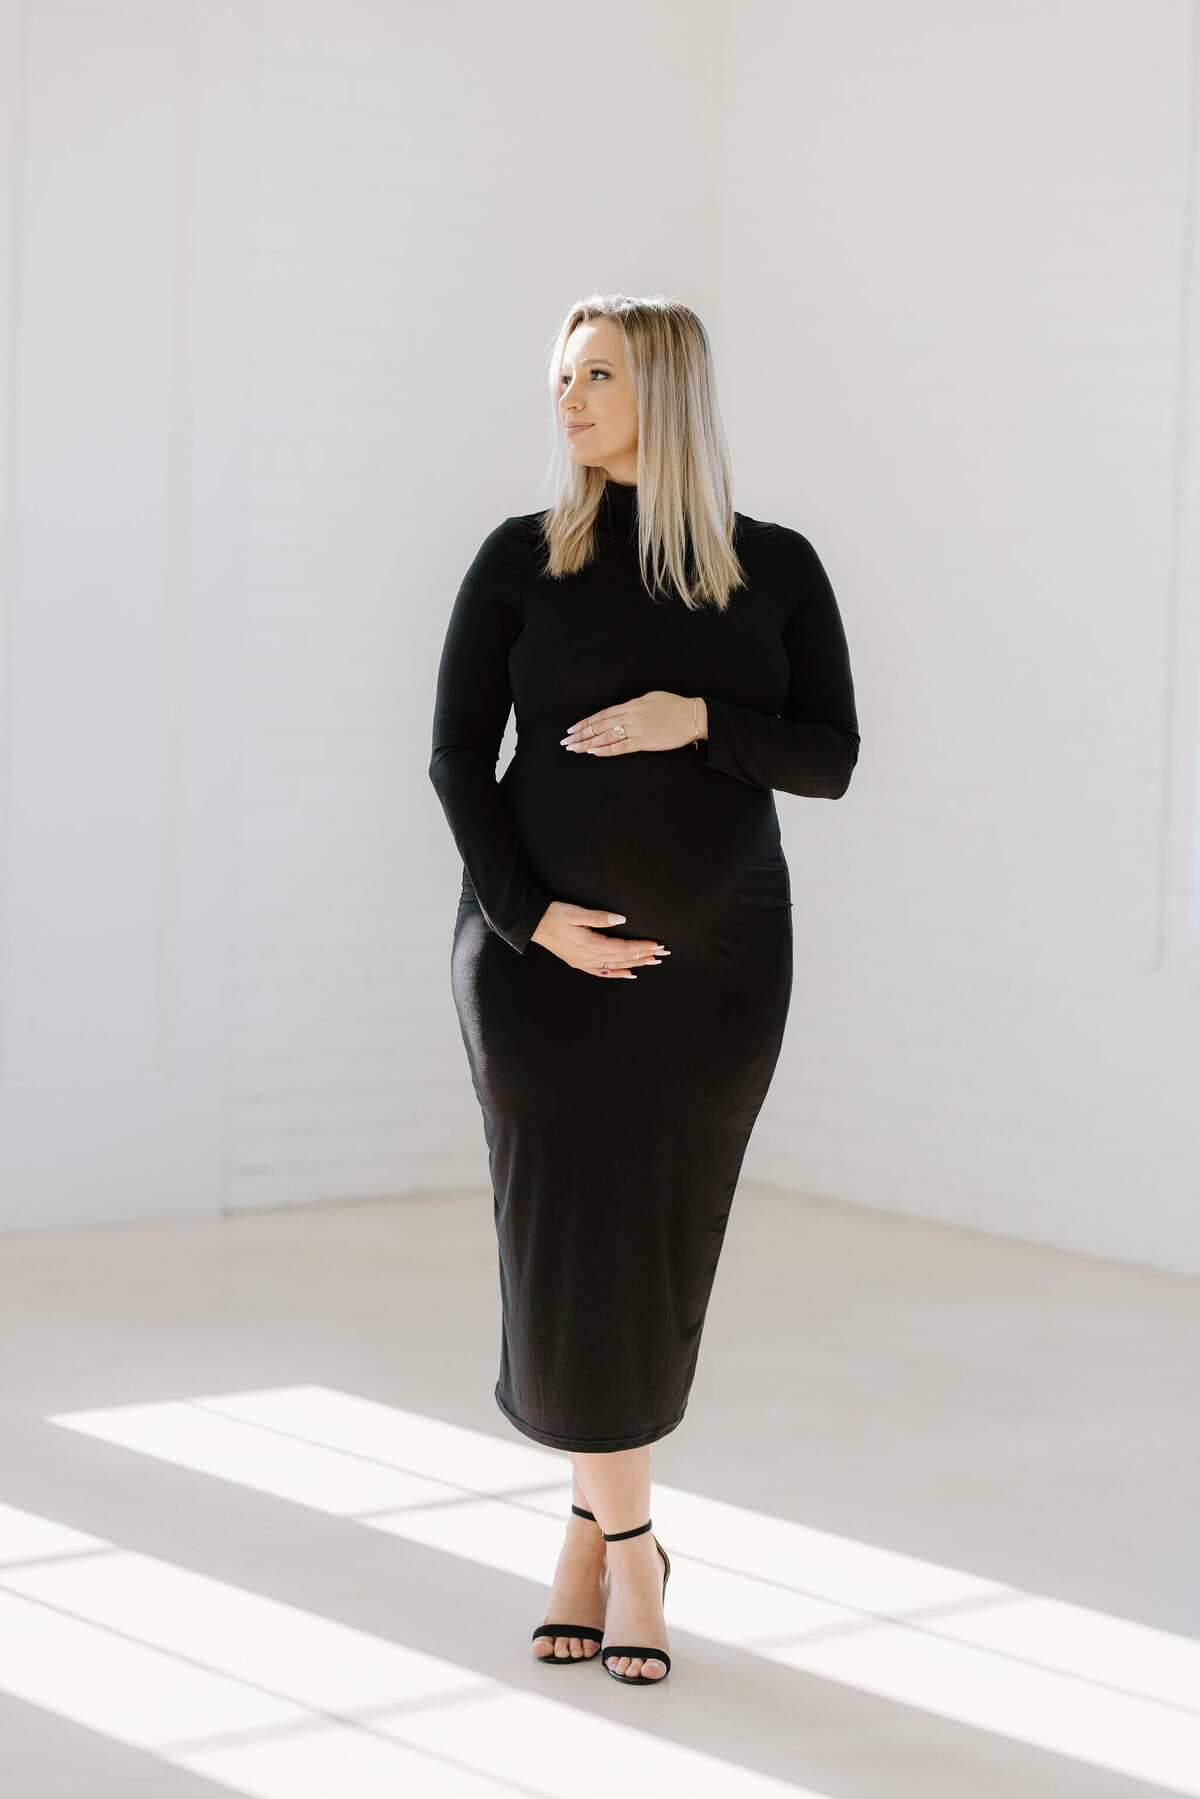 Fine art maternity portrait of mommy to be in long elegant black dress